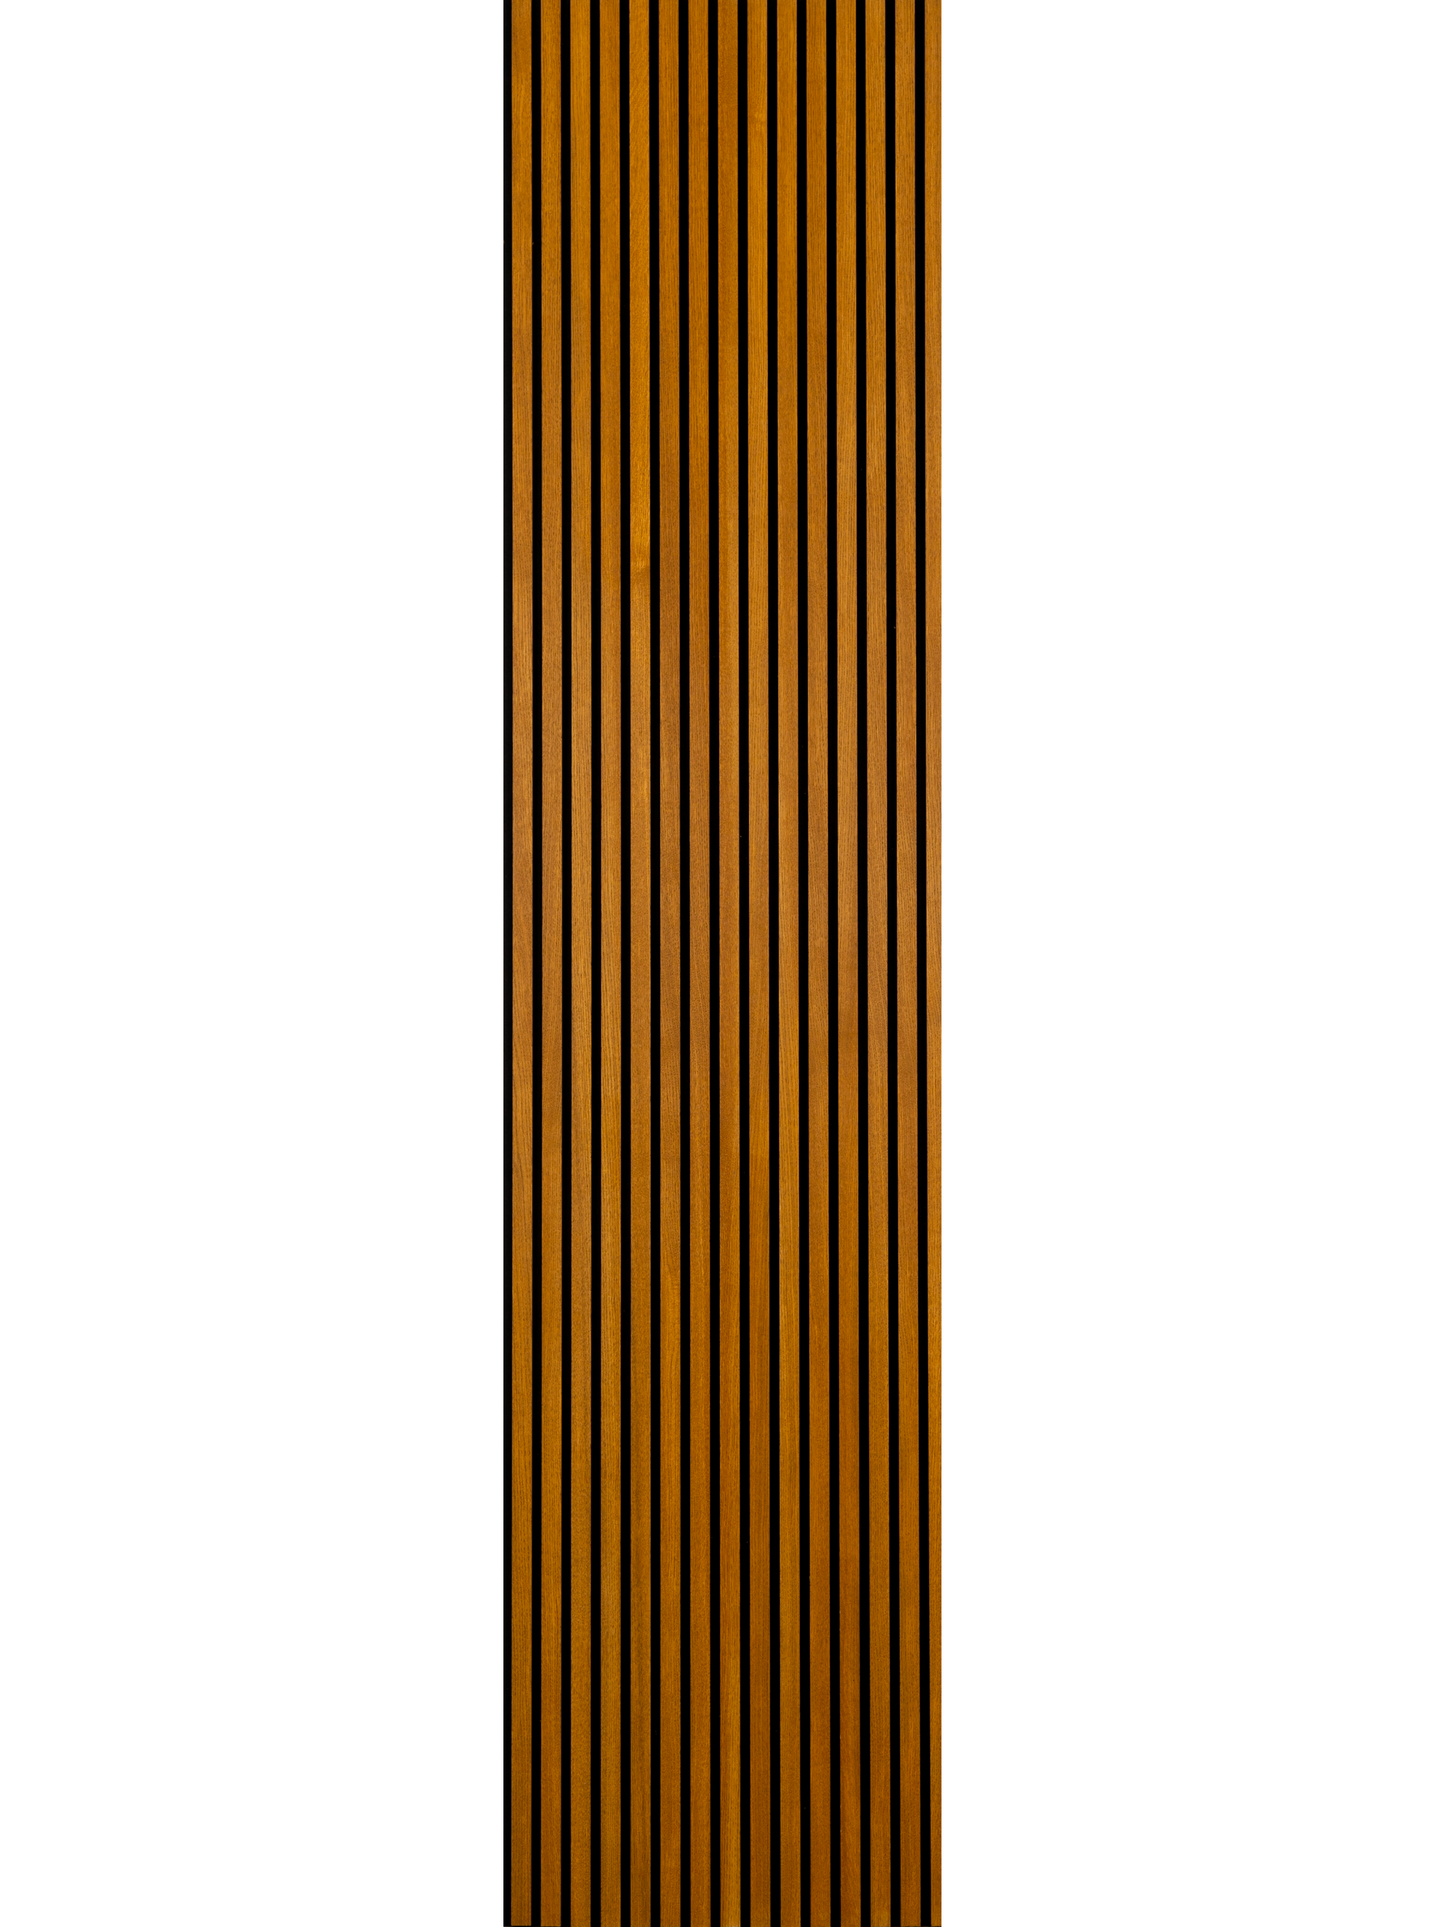 Eiken Wandpaneel Mahonie - 240/260/280/300 x 60 cm